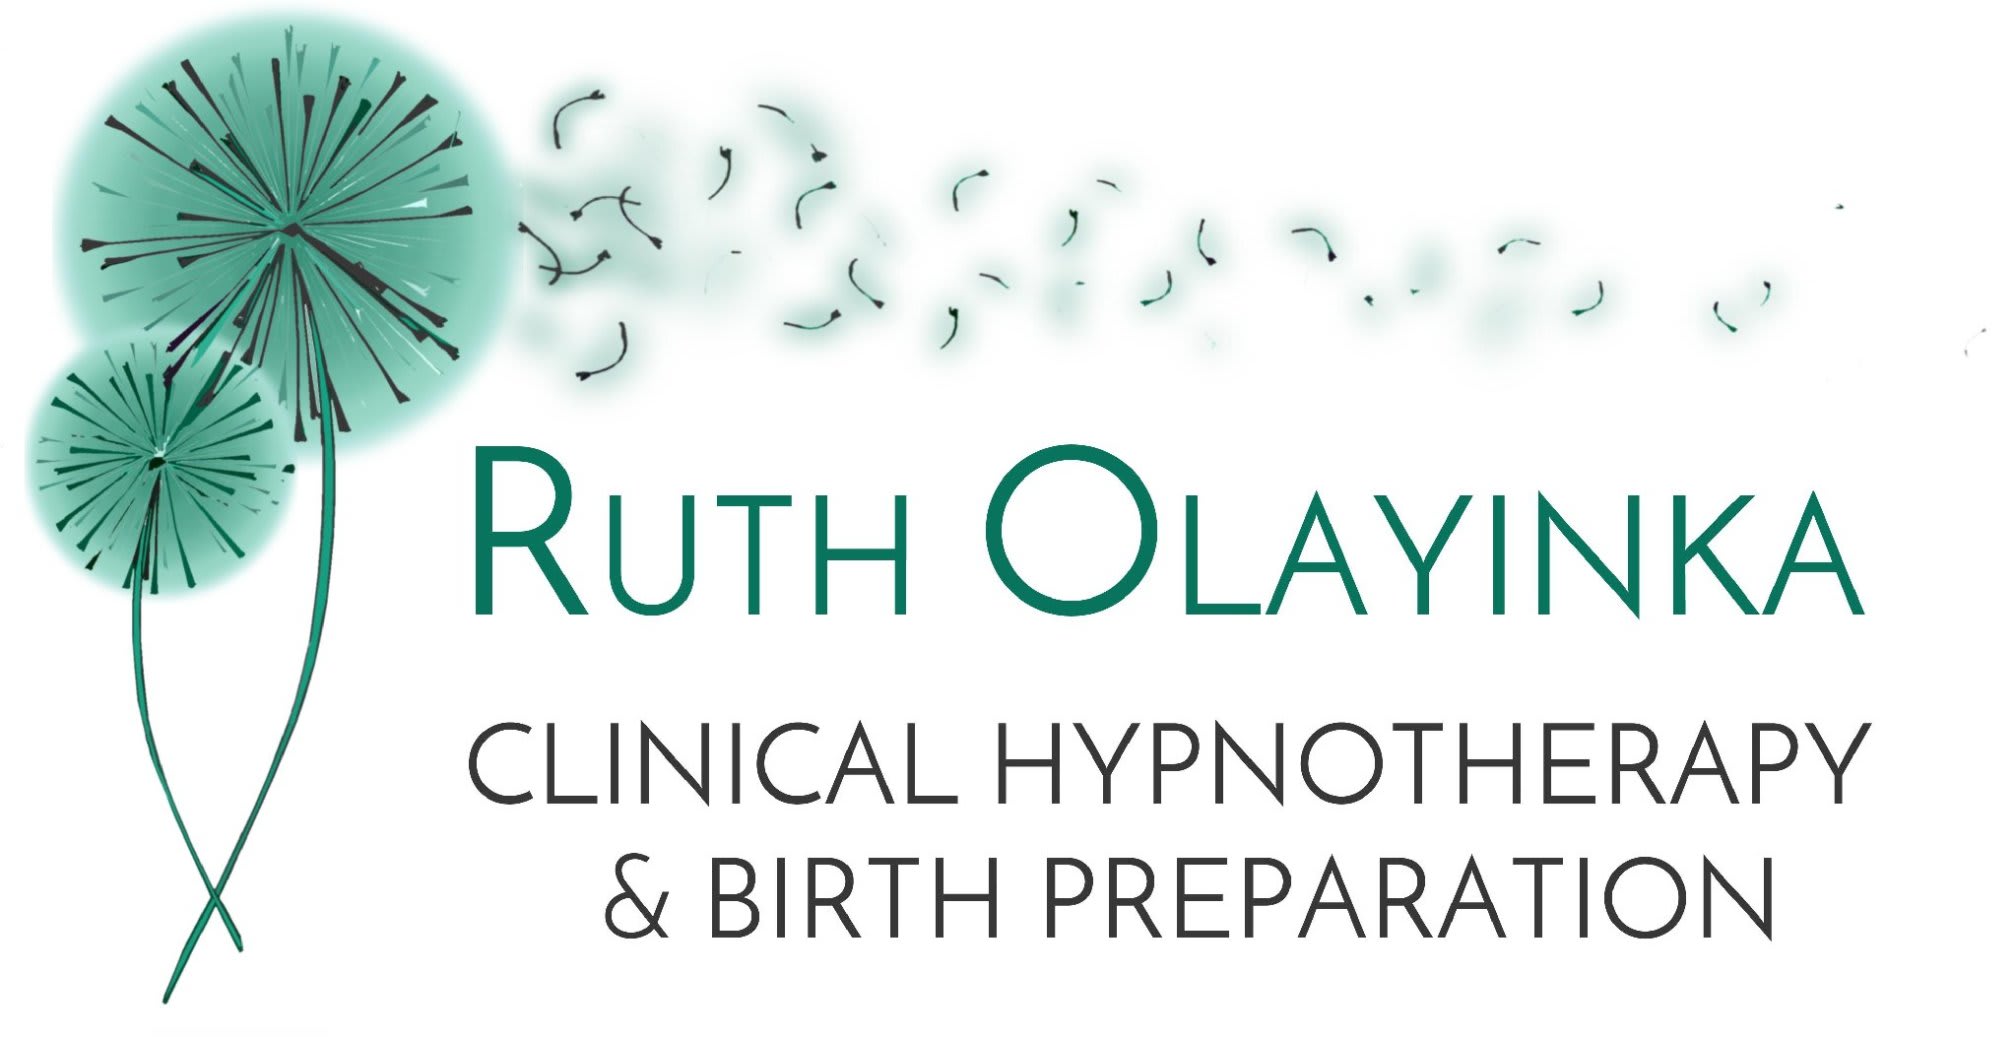 Ruth Olayinka Clinical Hypnotherapy & Birth Preparation | 2 Greenhead Terrace, Newcastle Upon Tyne NE17 7AH | +44 7904 643175